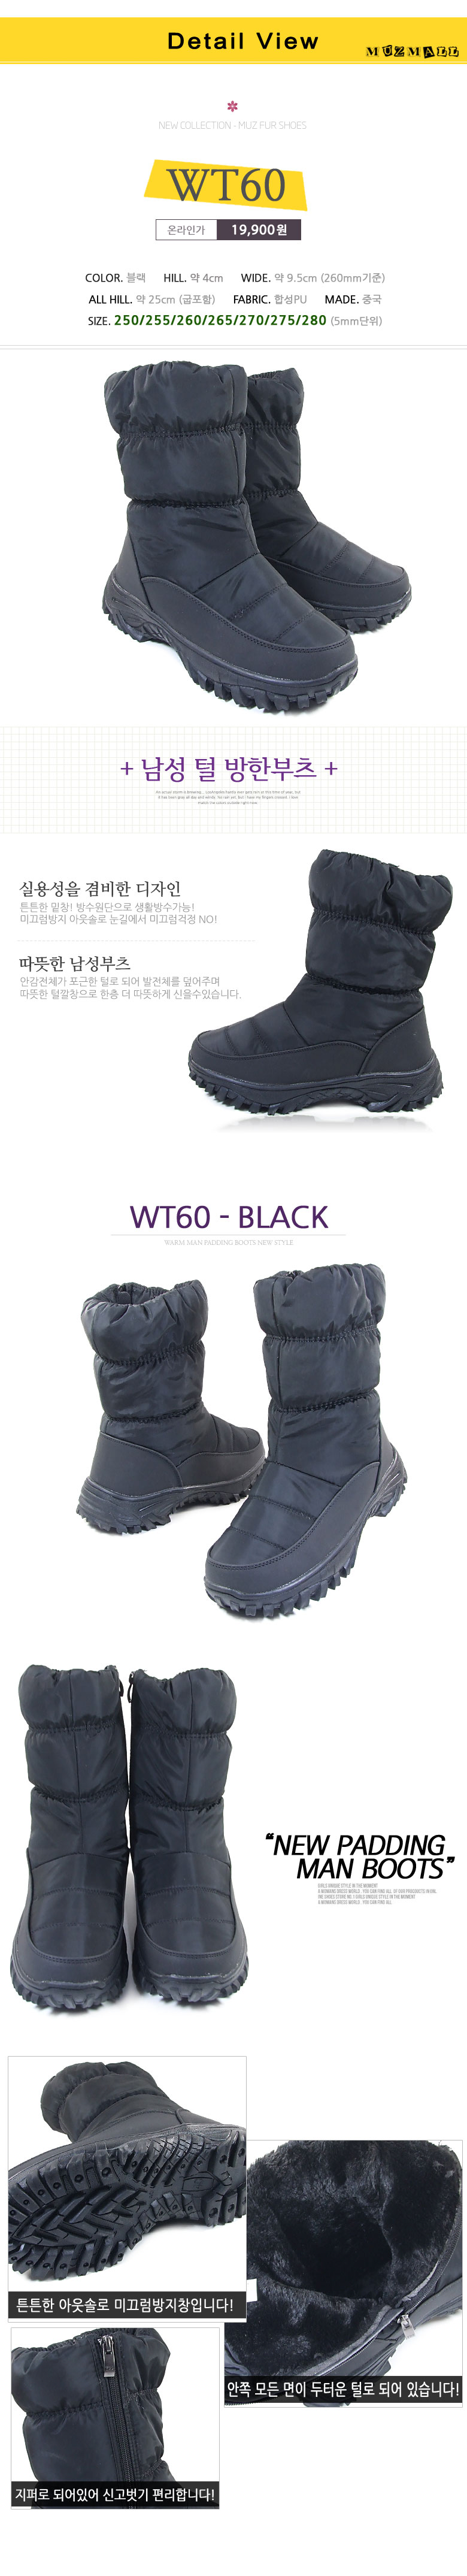 pipka snow boots